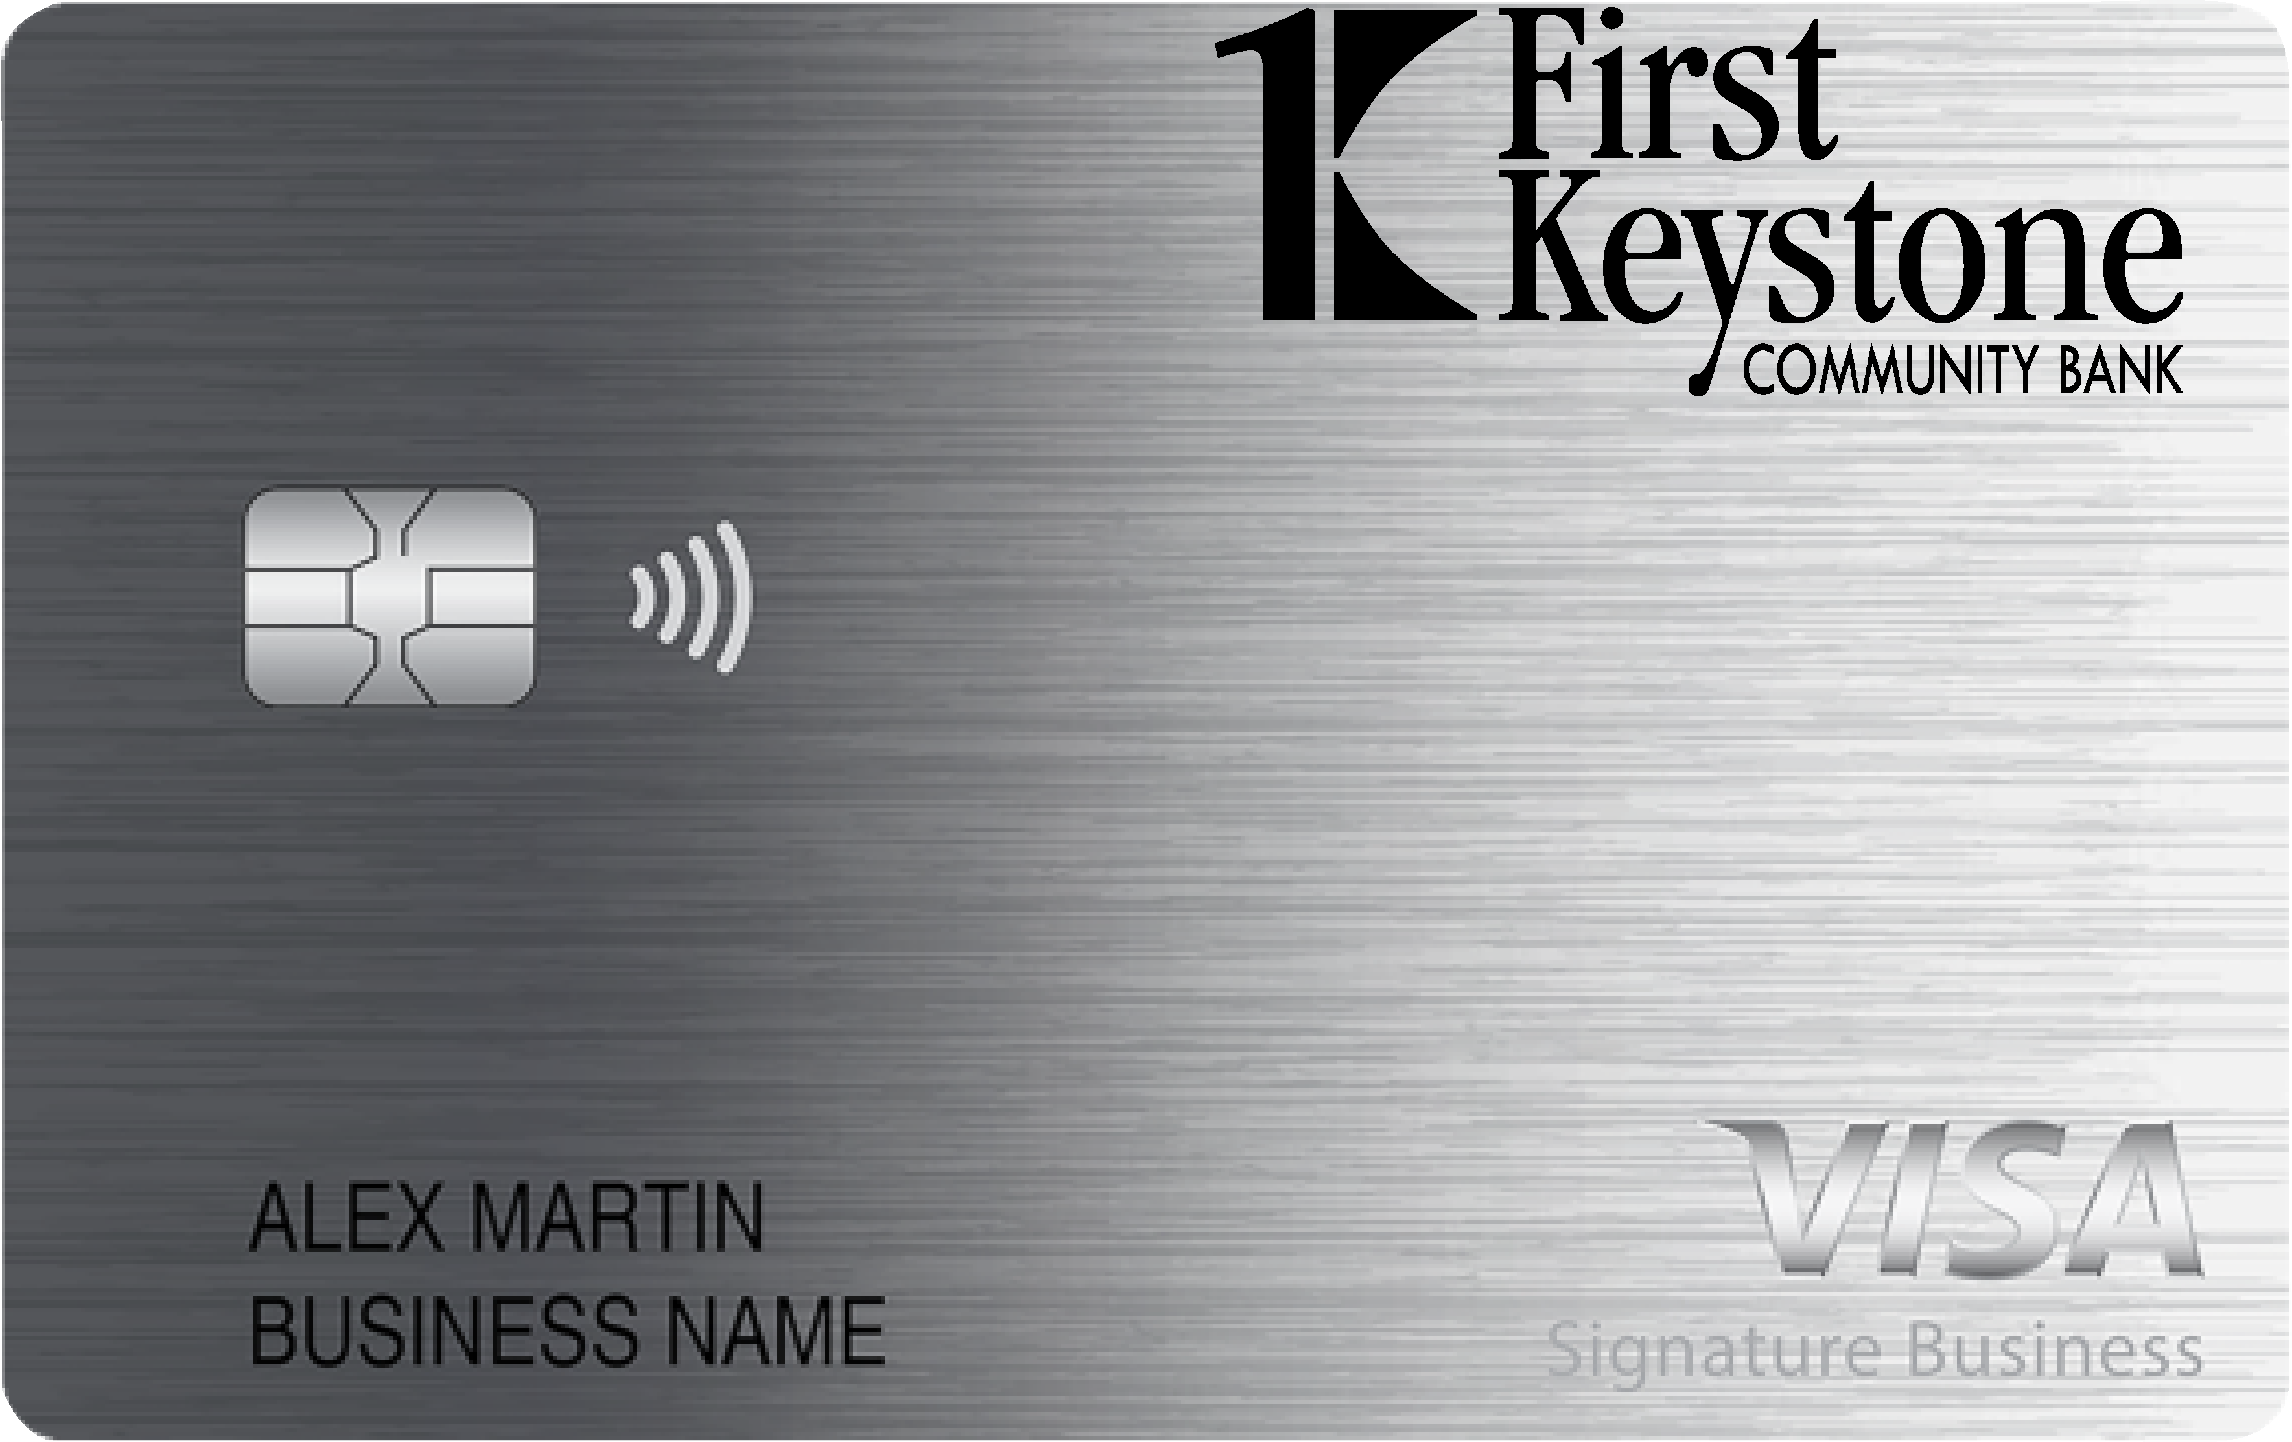 First Keystone Community Bank Smart Business Rewards Card